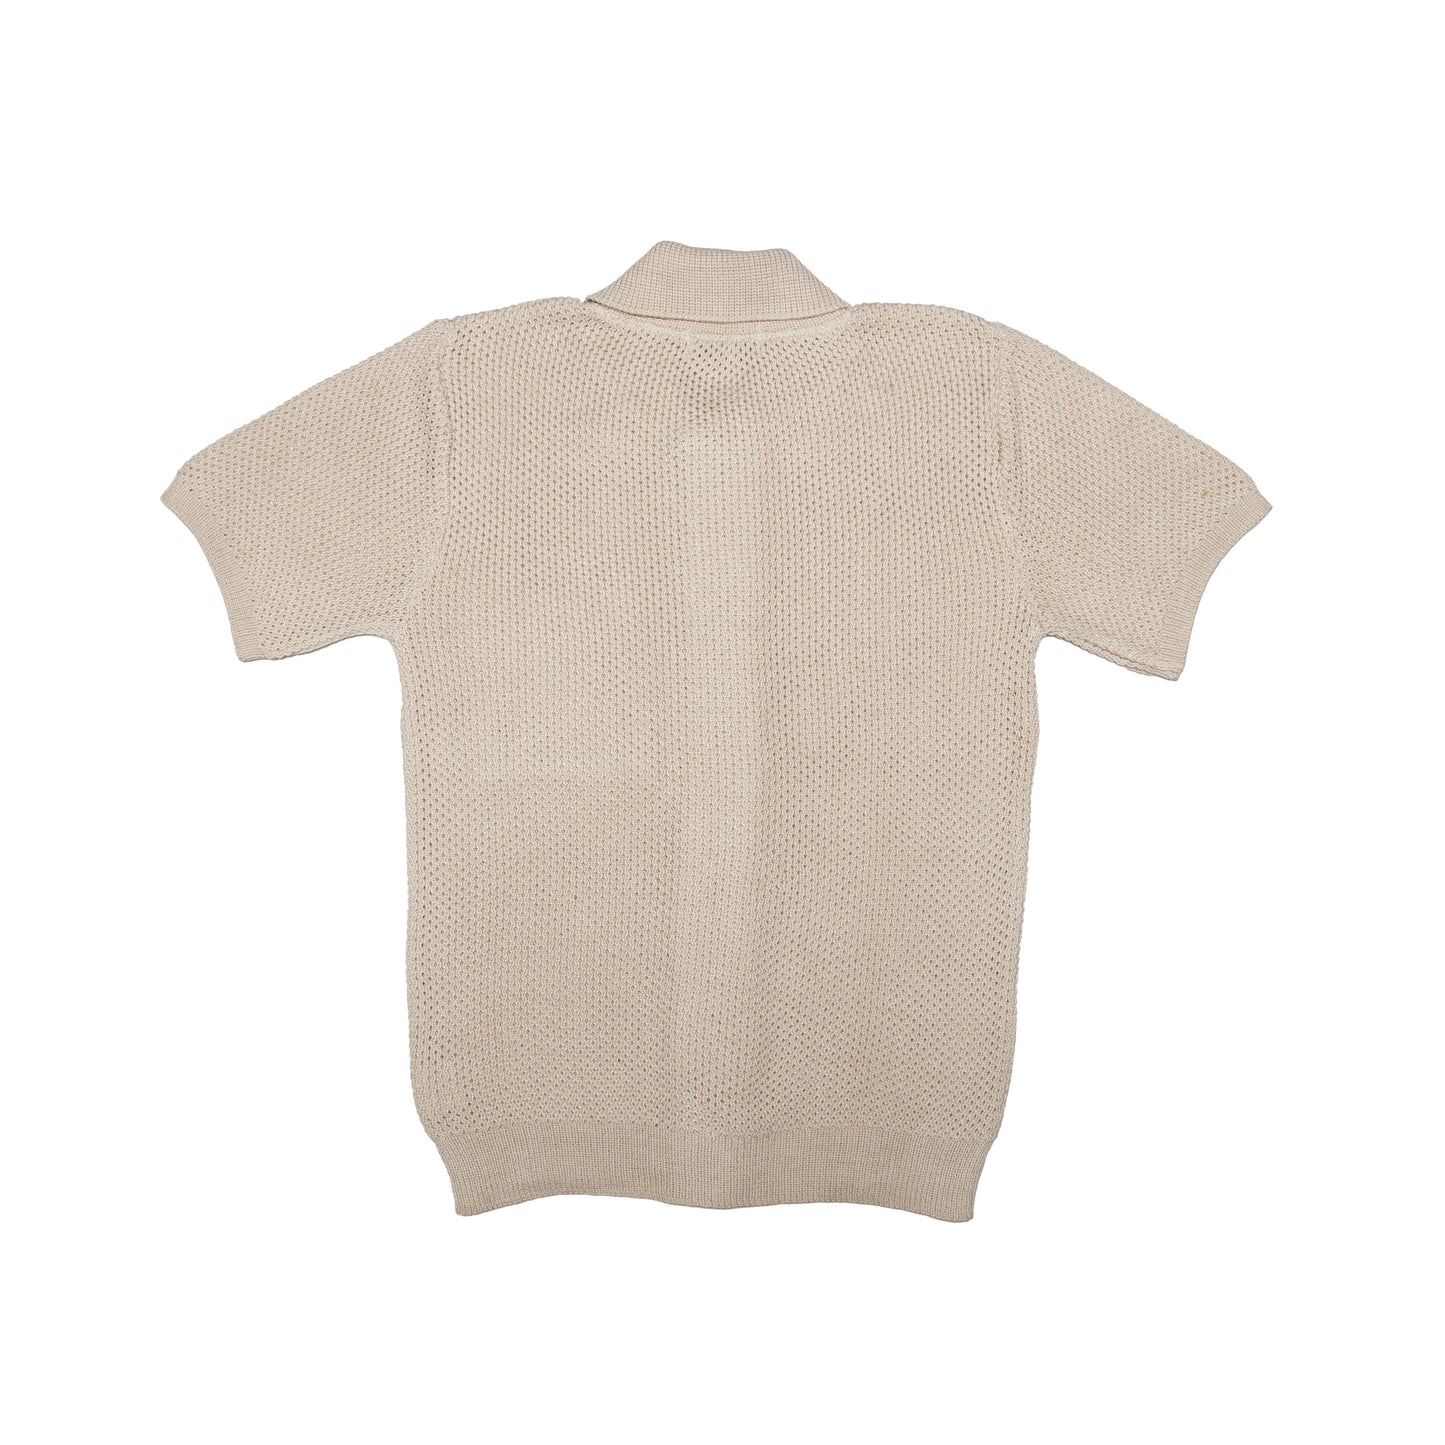 Sol Sol Knit Button Shirt - Off White